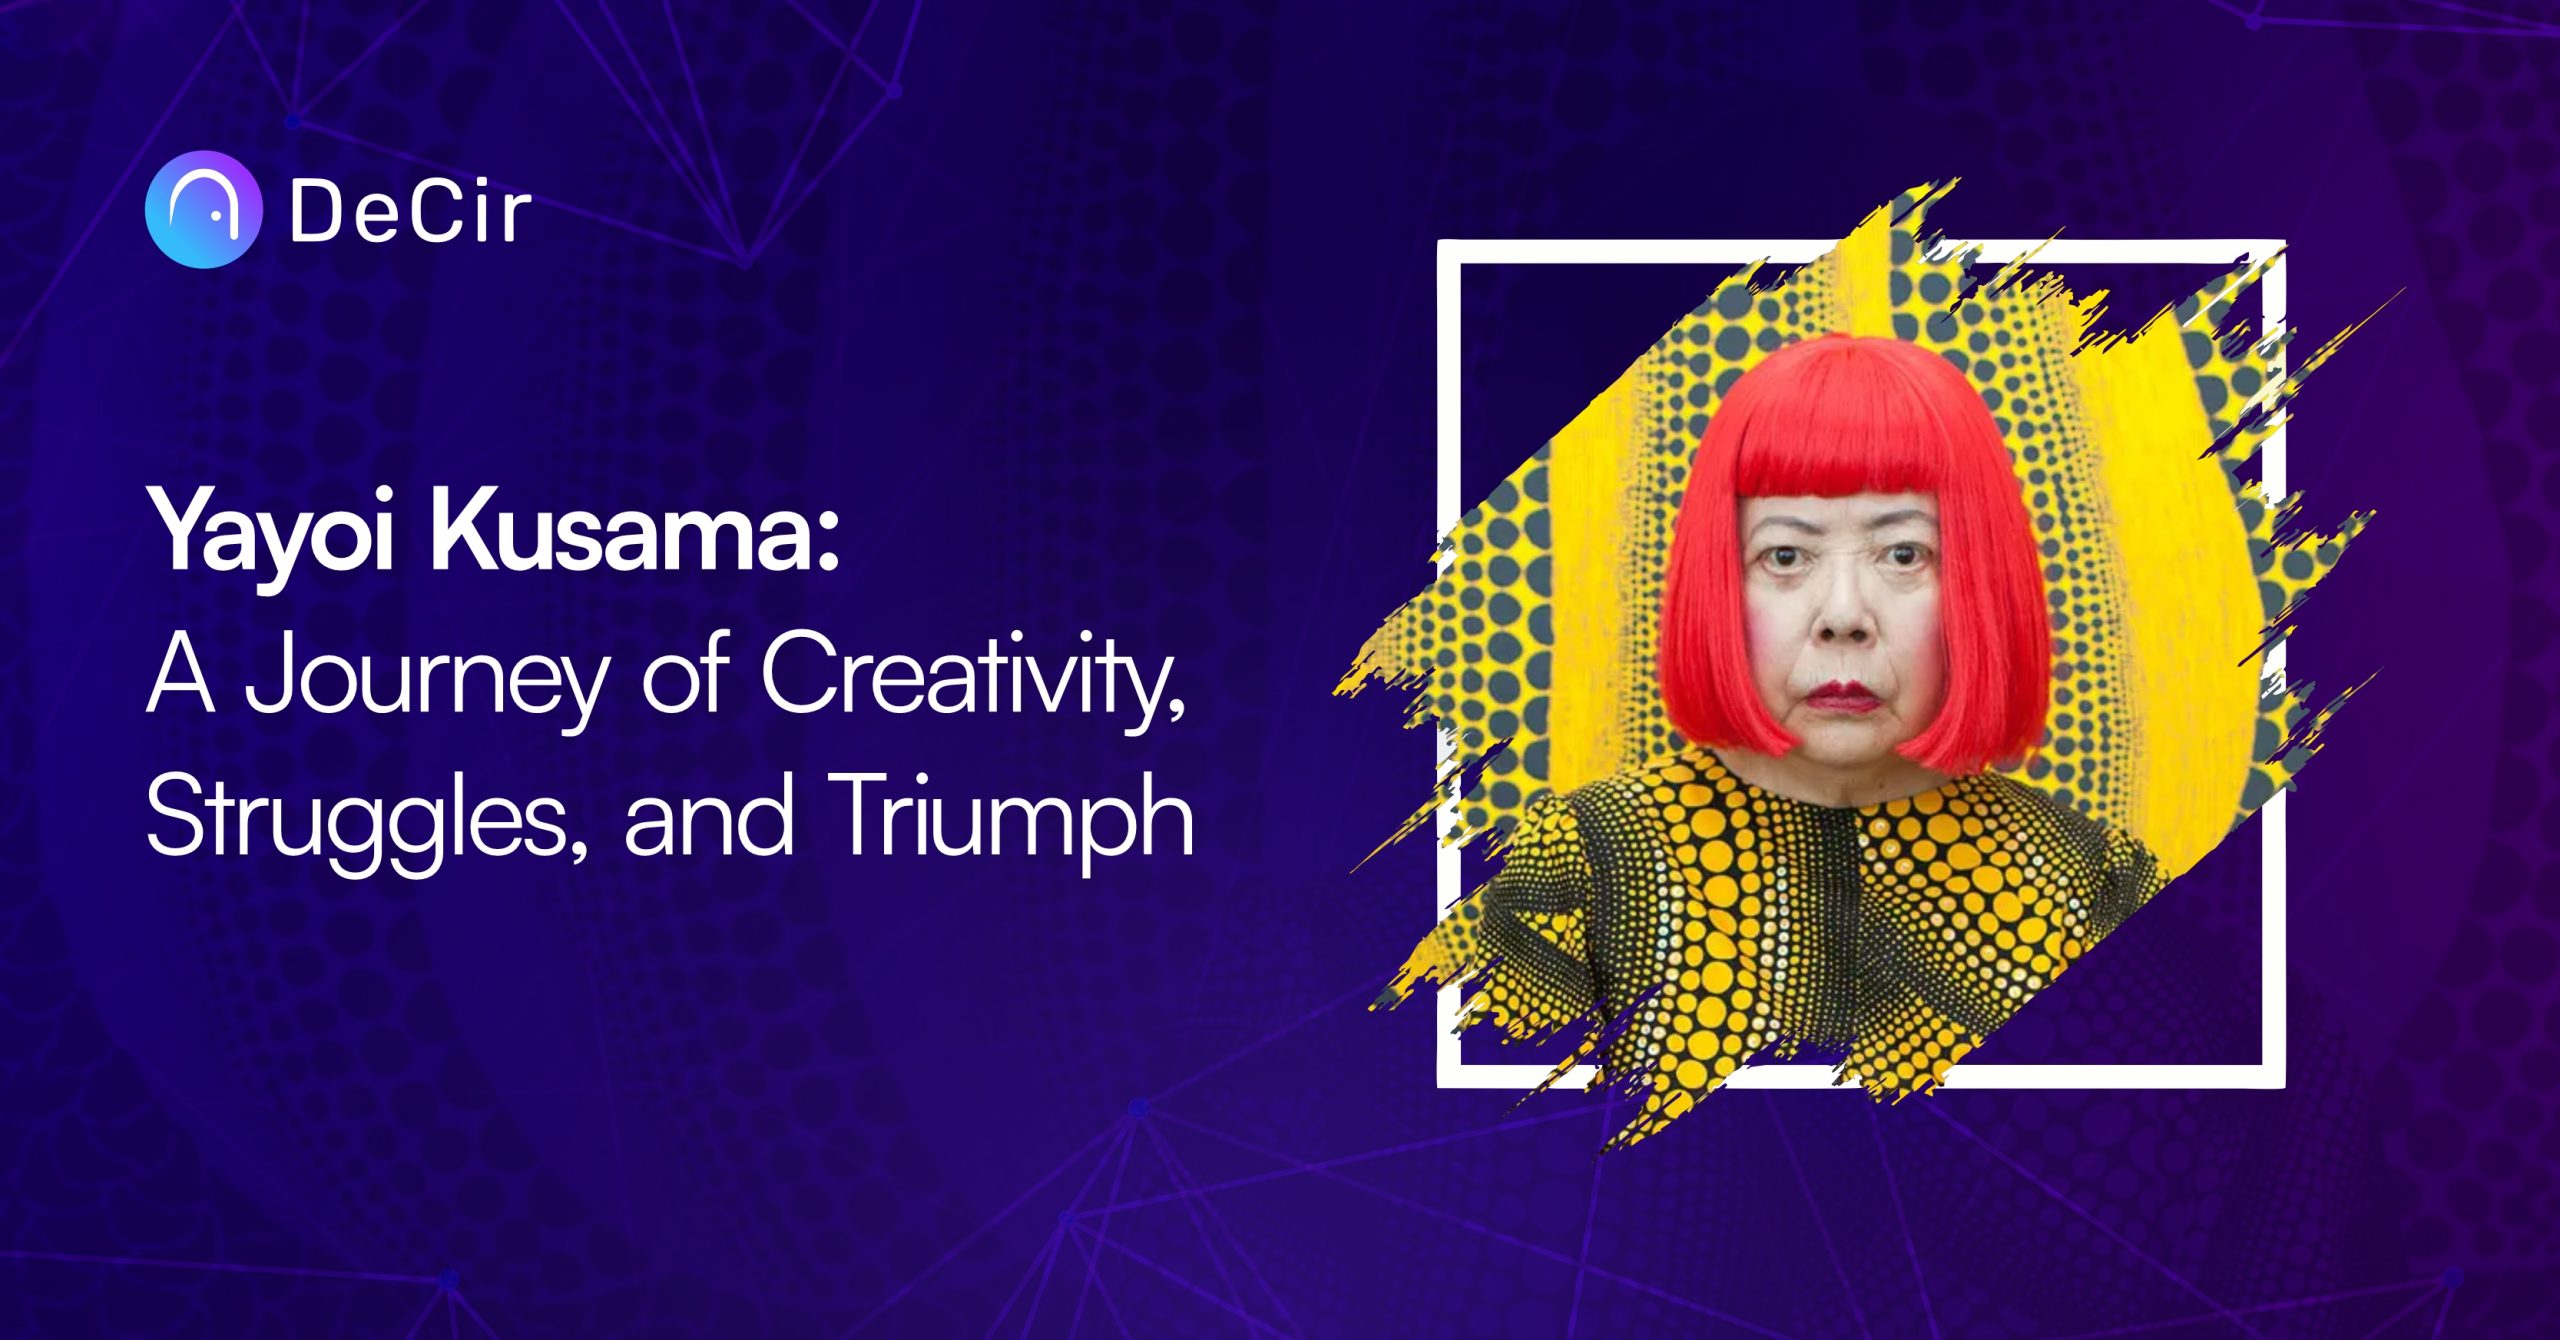 Yayoi Kusama: A Journey of Creativity, Struggles, and Triumph